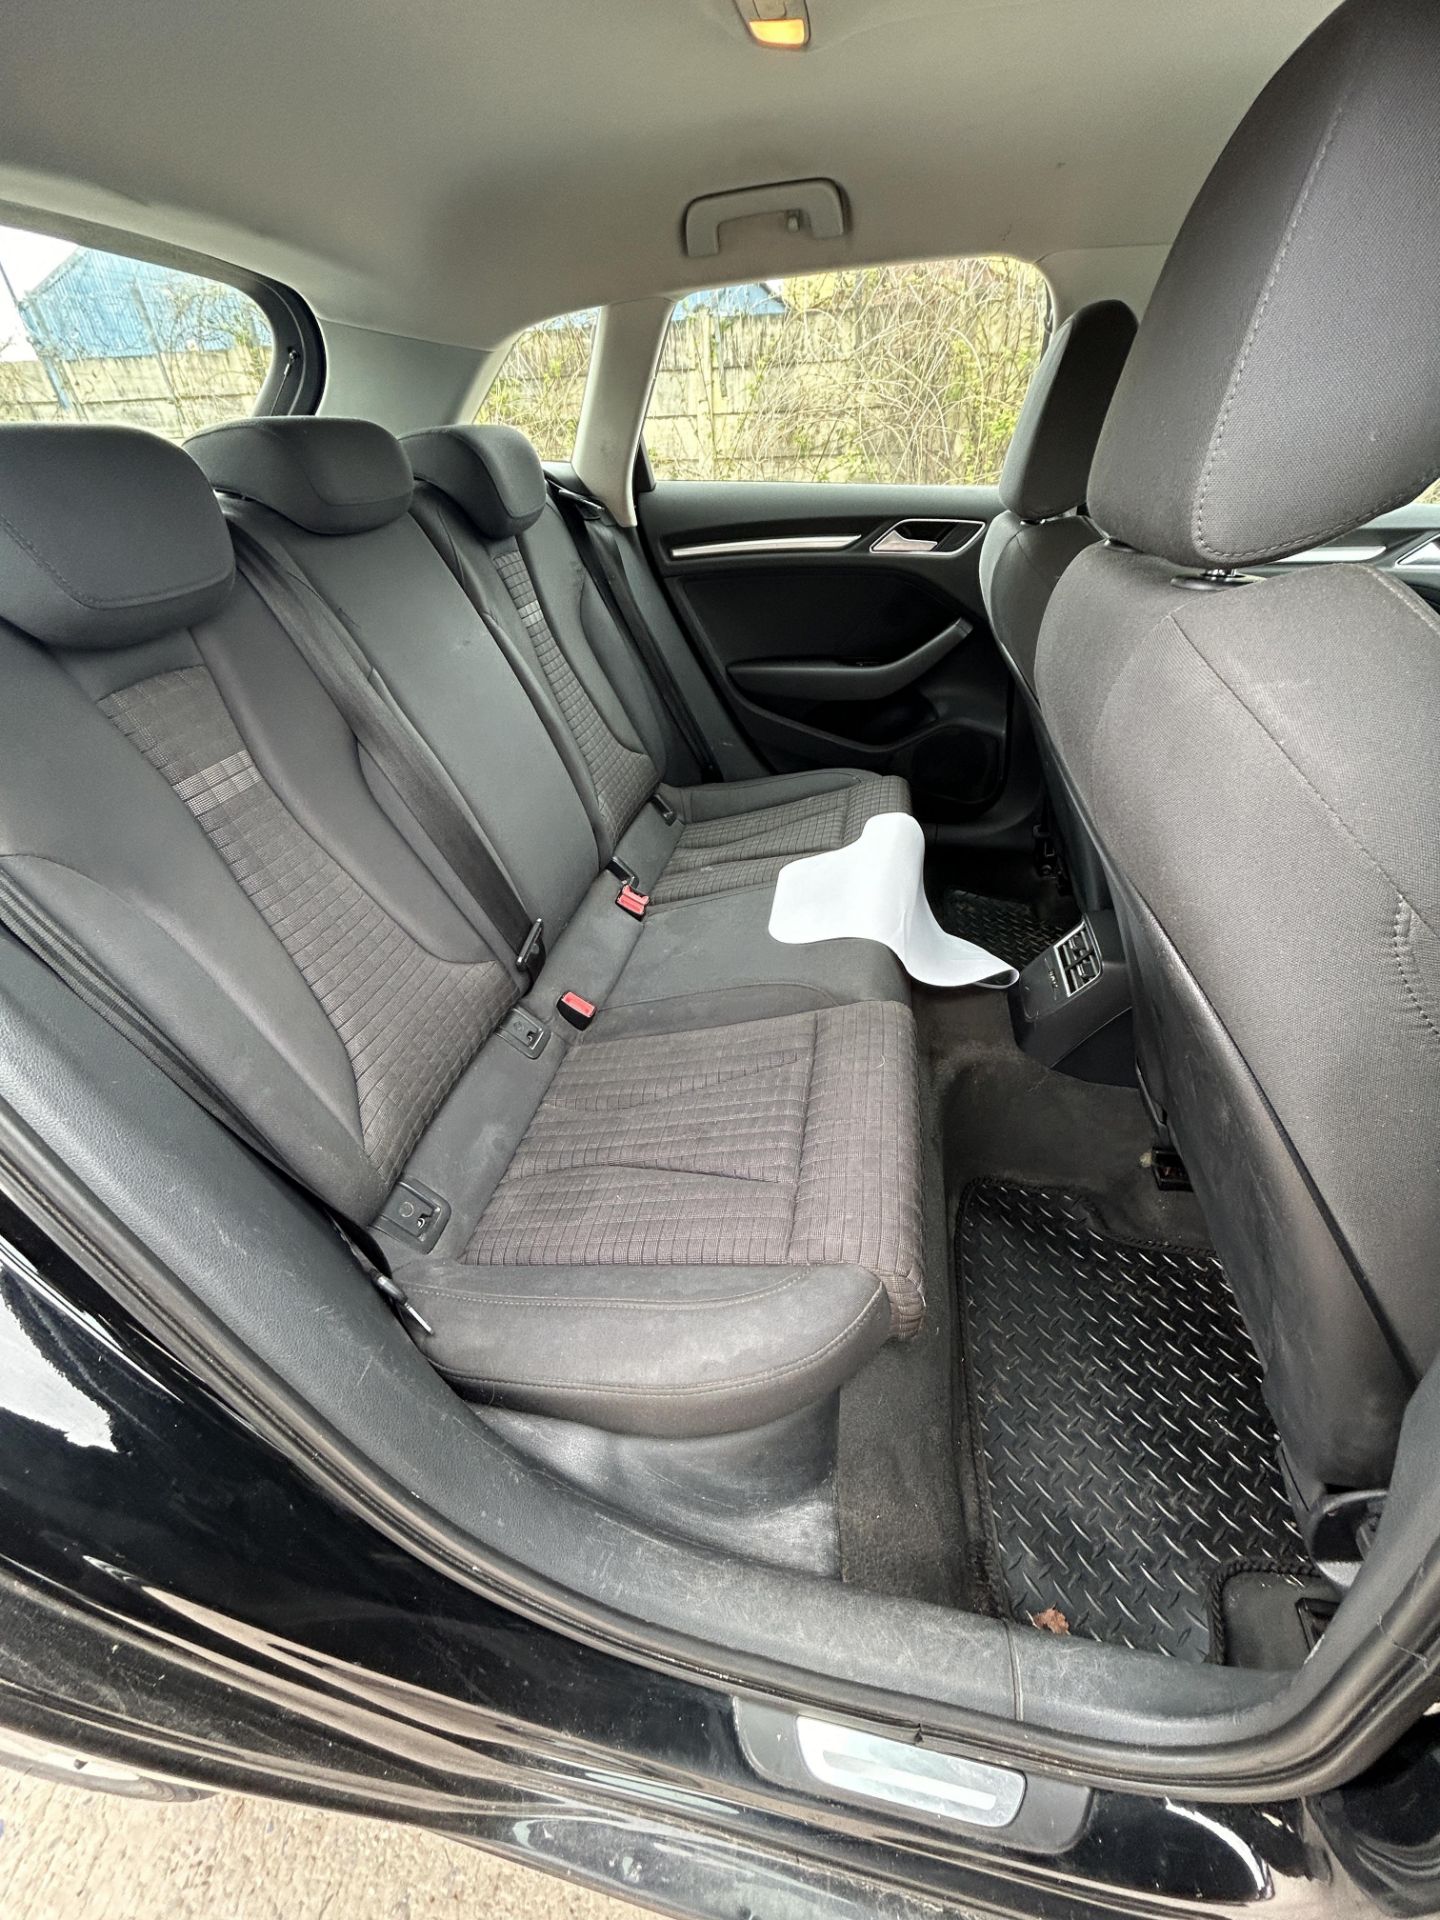 Audi A3 Sport TDI Diesel 5 Door Hatchback | YK14 CLZ | 178,860 Miles - Image 9 of 14